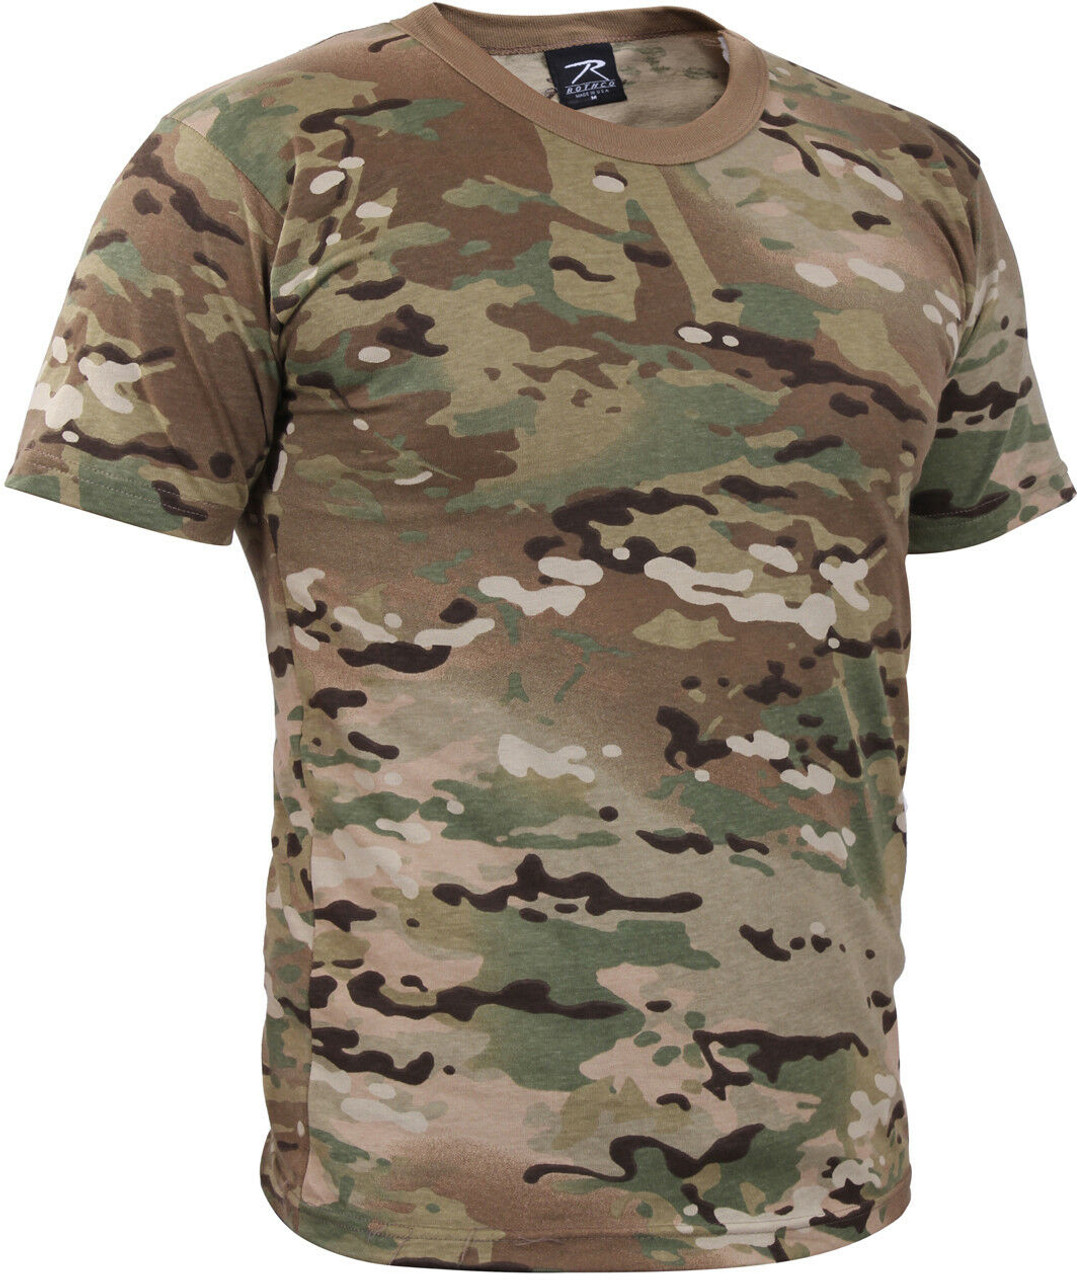 OCP Multicam Camo T-Shirt Military Tee Army Short Sleeve Cotton Crew Neck